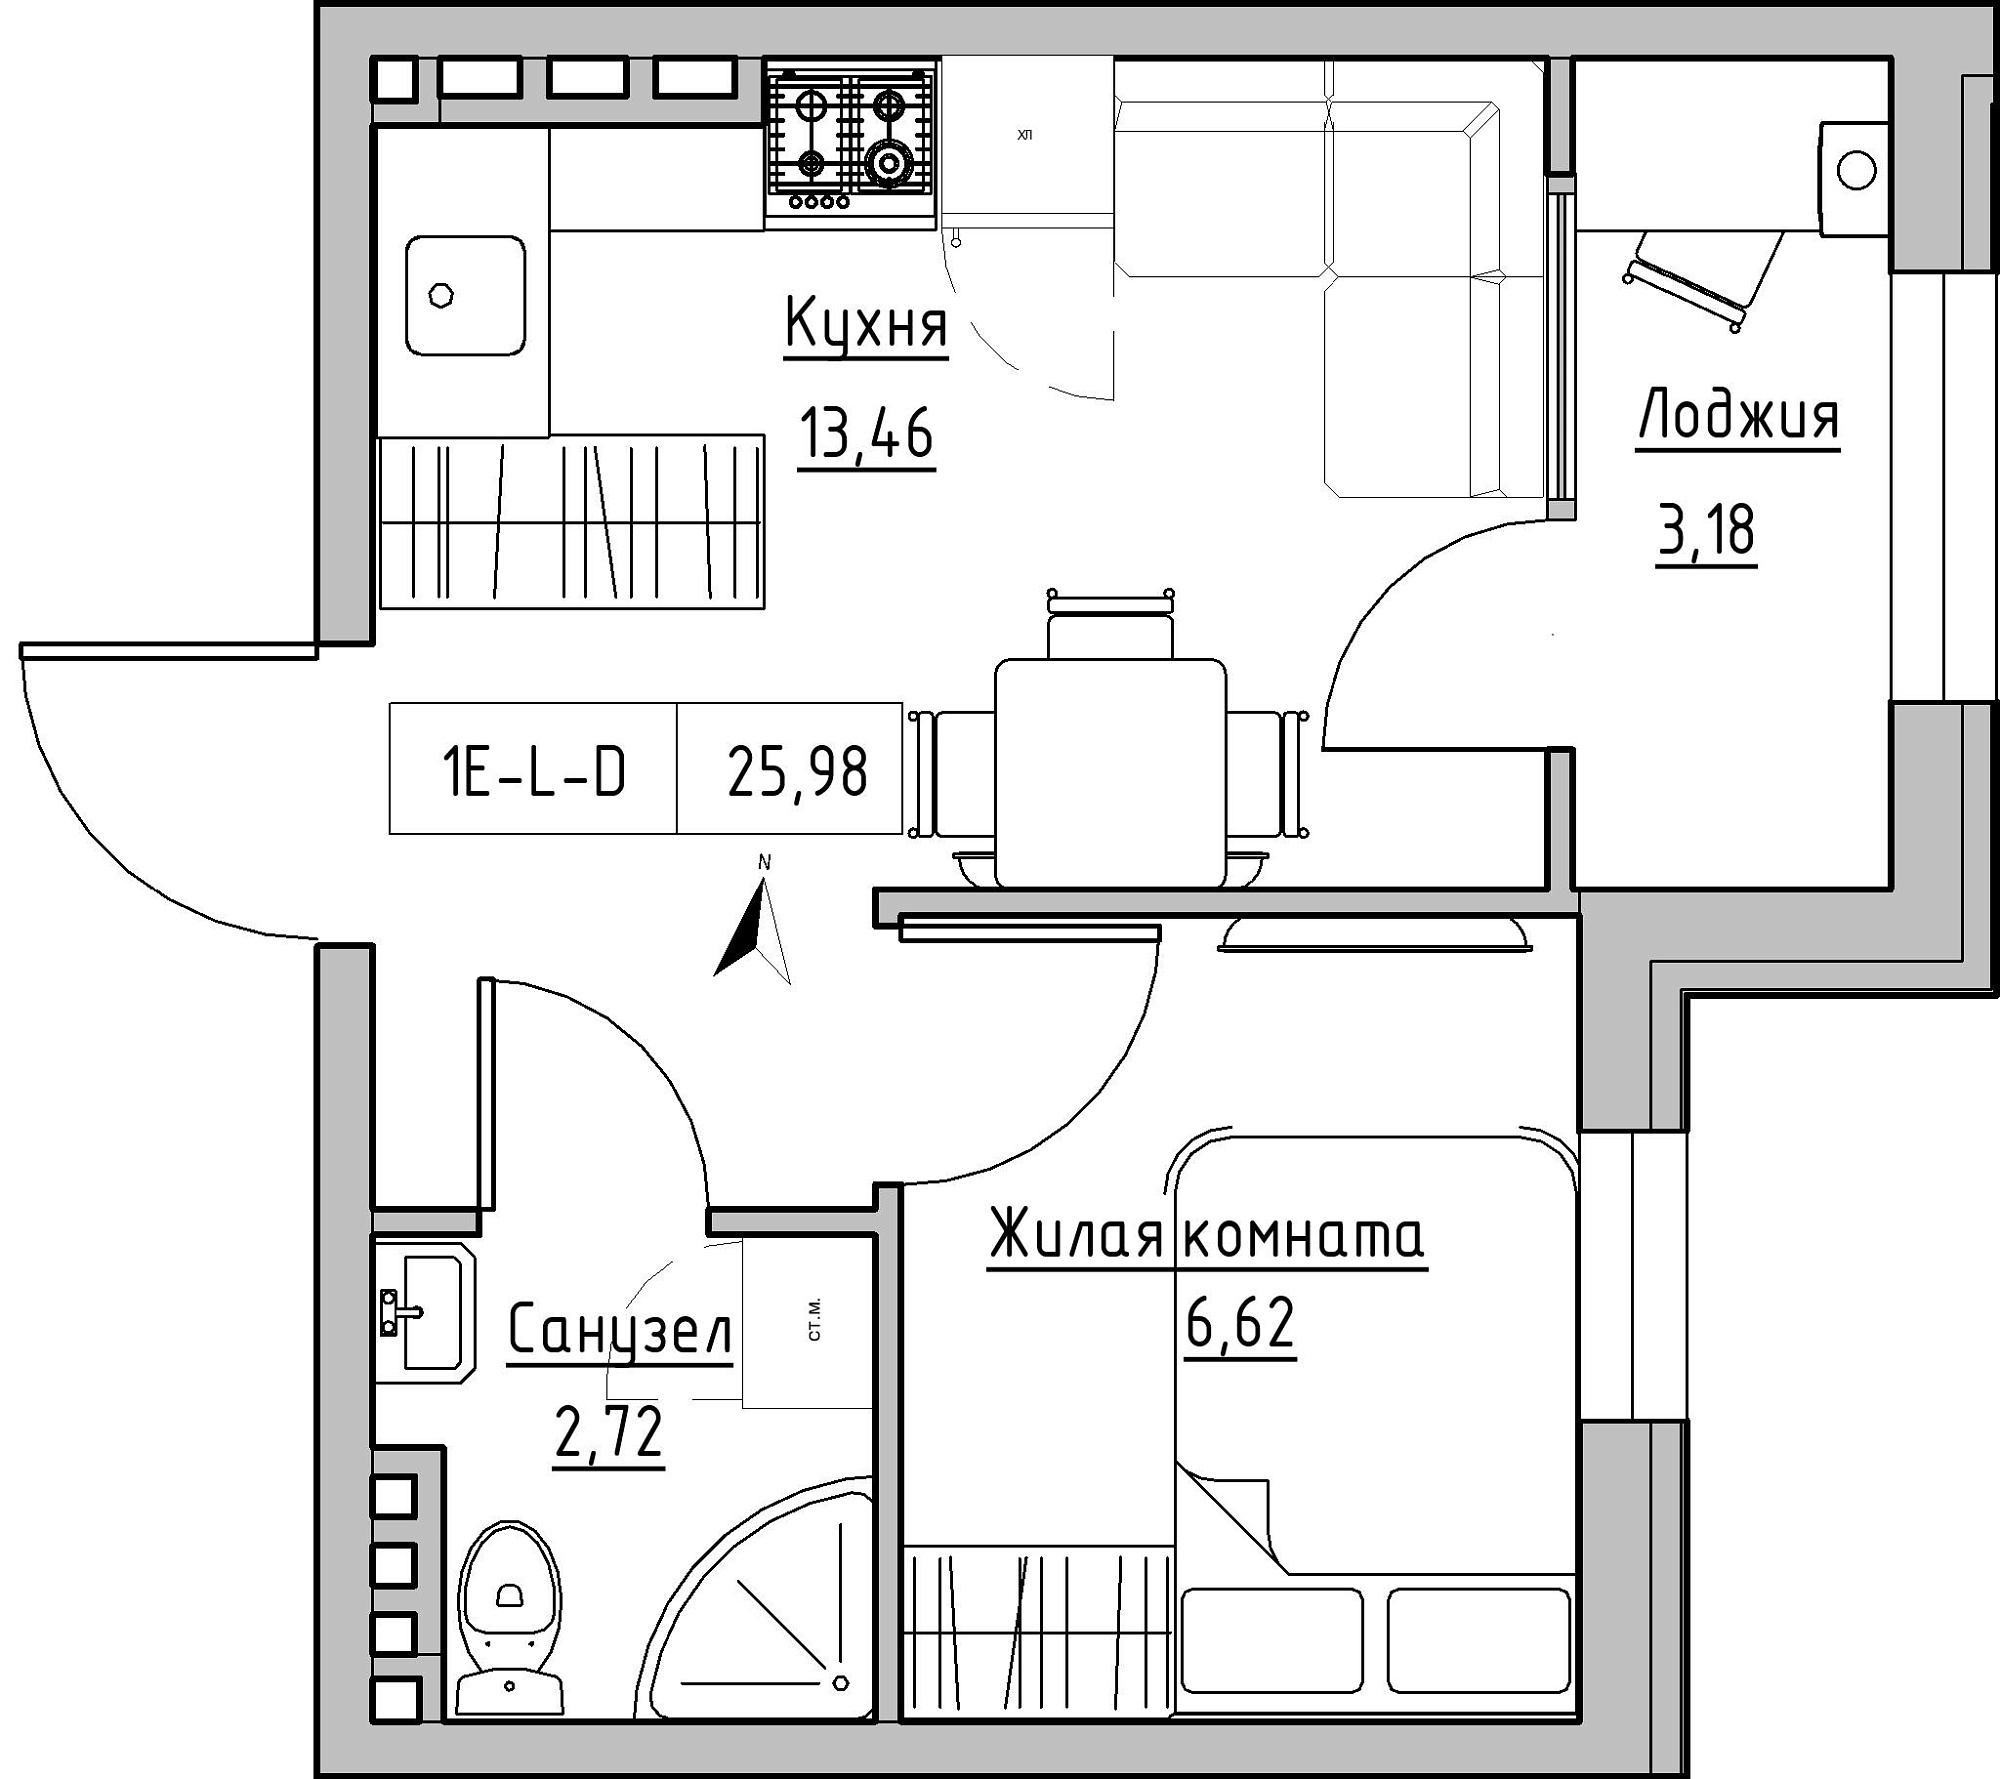 Planning 1-rm flats area 25.98m2, KS-024-03/0017.